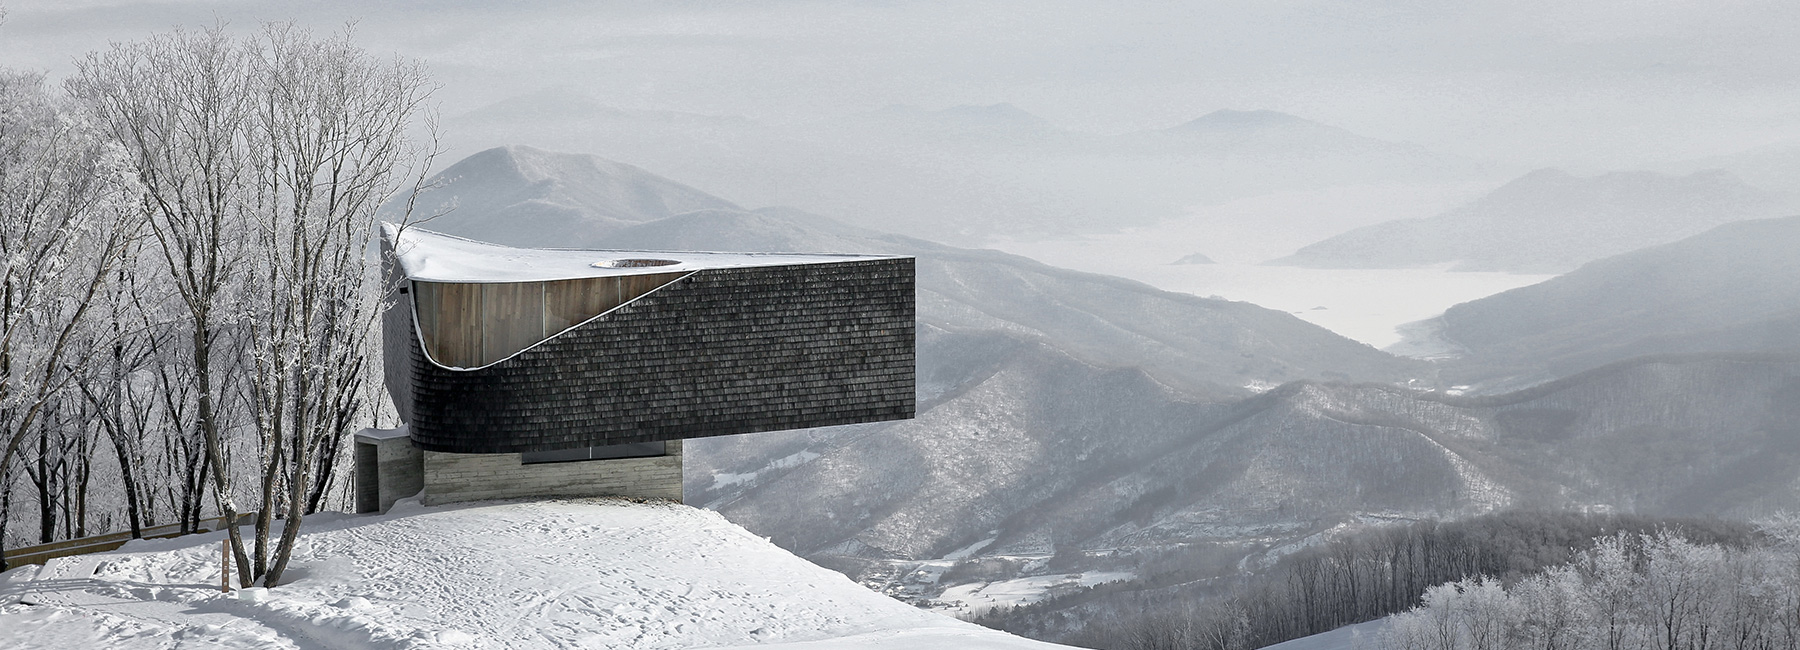 META-project's ski slope observatory frames vistas of a picturesque chinese landscape